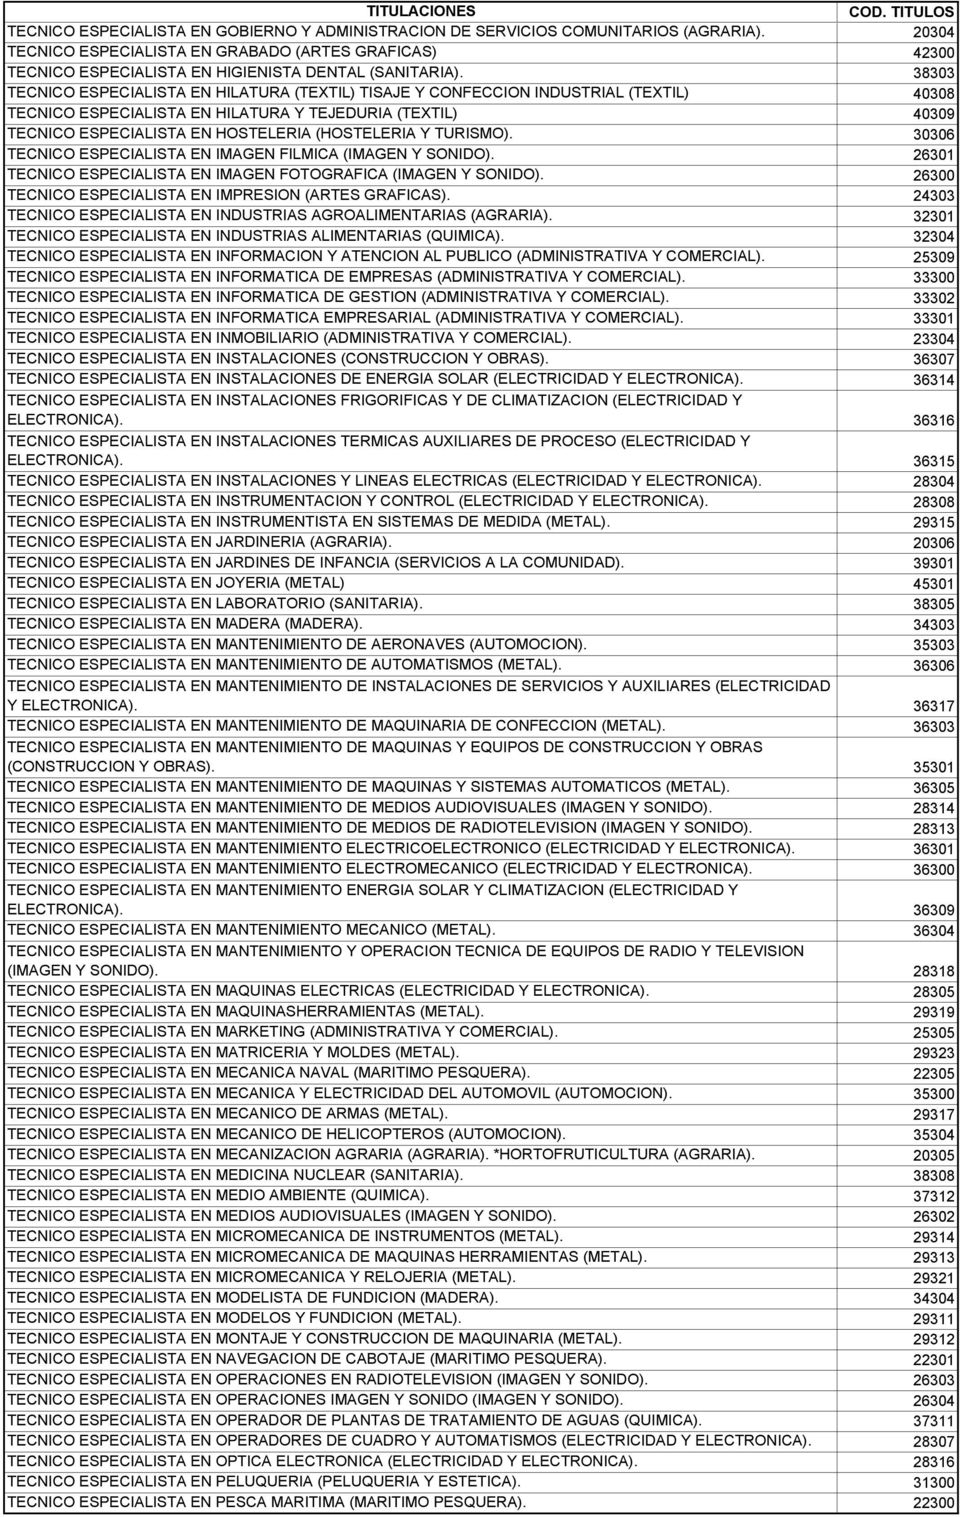 38303 TECNICO ESPECIALISTA EN HILATURA (TEXTIL) TISAJE Y CONFECCION INDUSTRIAL (TEXTIL) 40308 TECNICO ESPECIALISTA EN HILATURA Y TEJEDURIA (TEXTIL) 40309 TECNICO ESPECIALISTA EN HOSTELERIA